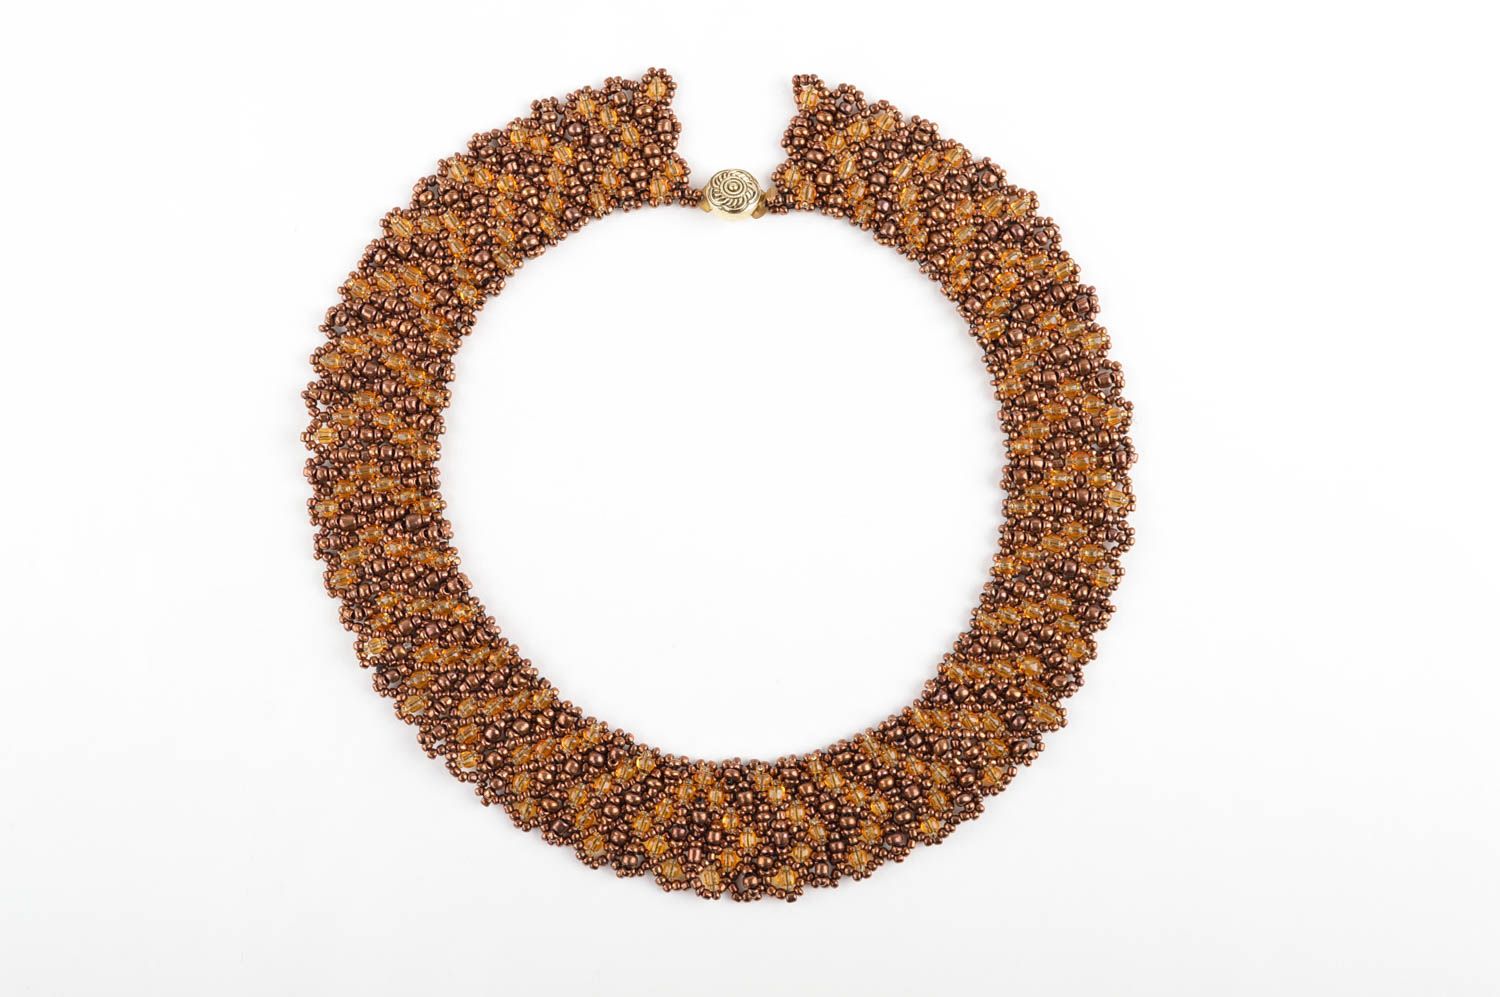 Handmade beaded necklace wrist bracelet designs costume jewelry set ideas photo 3